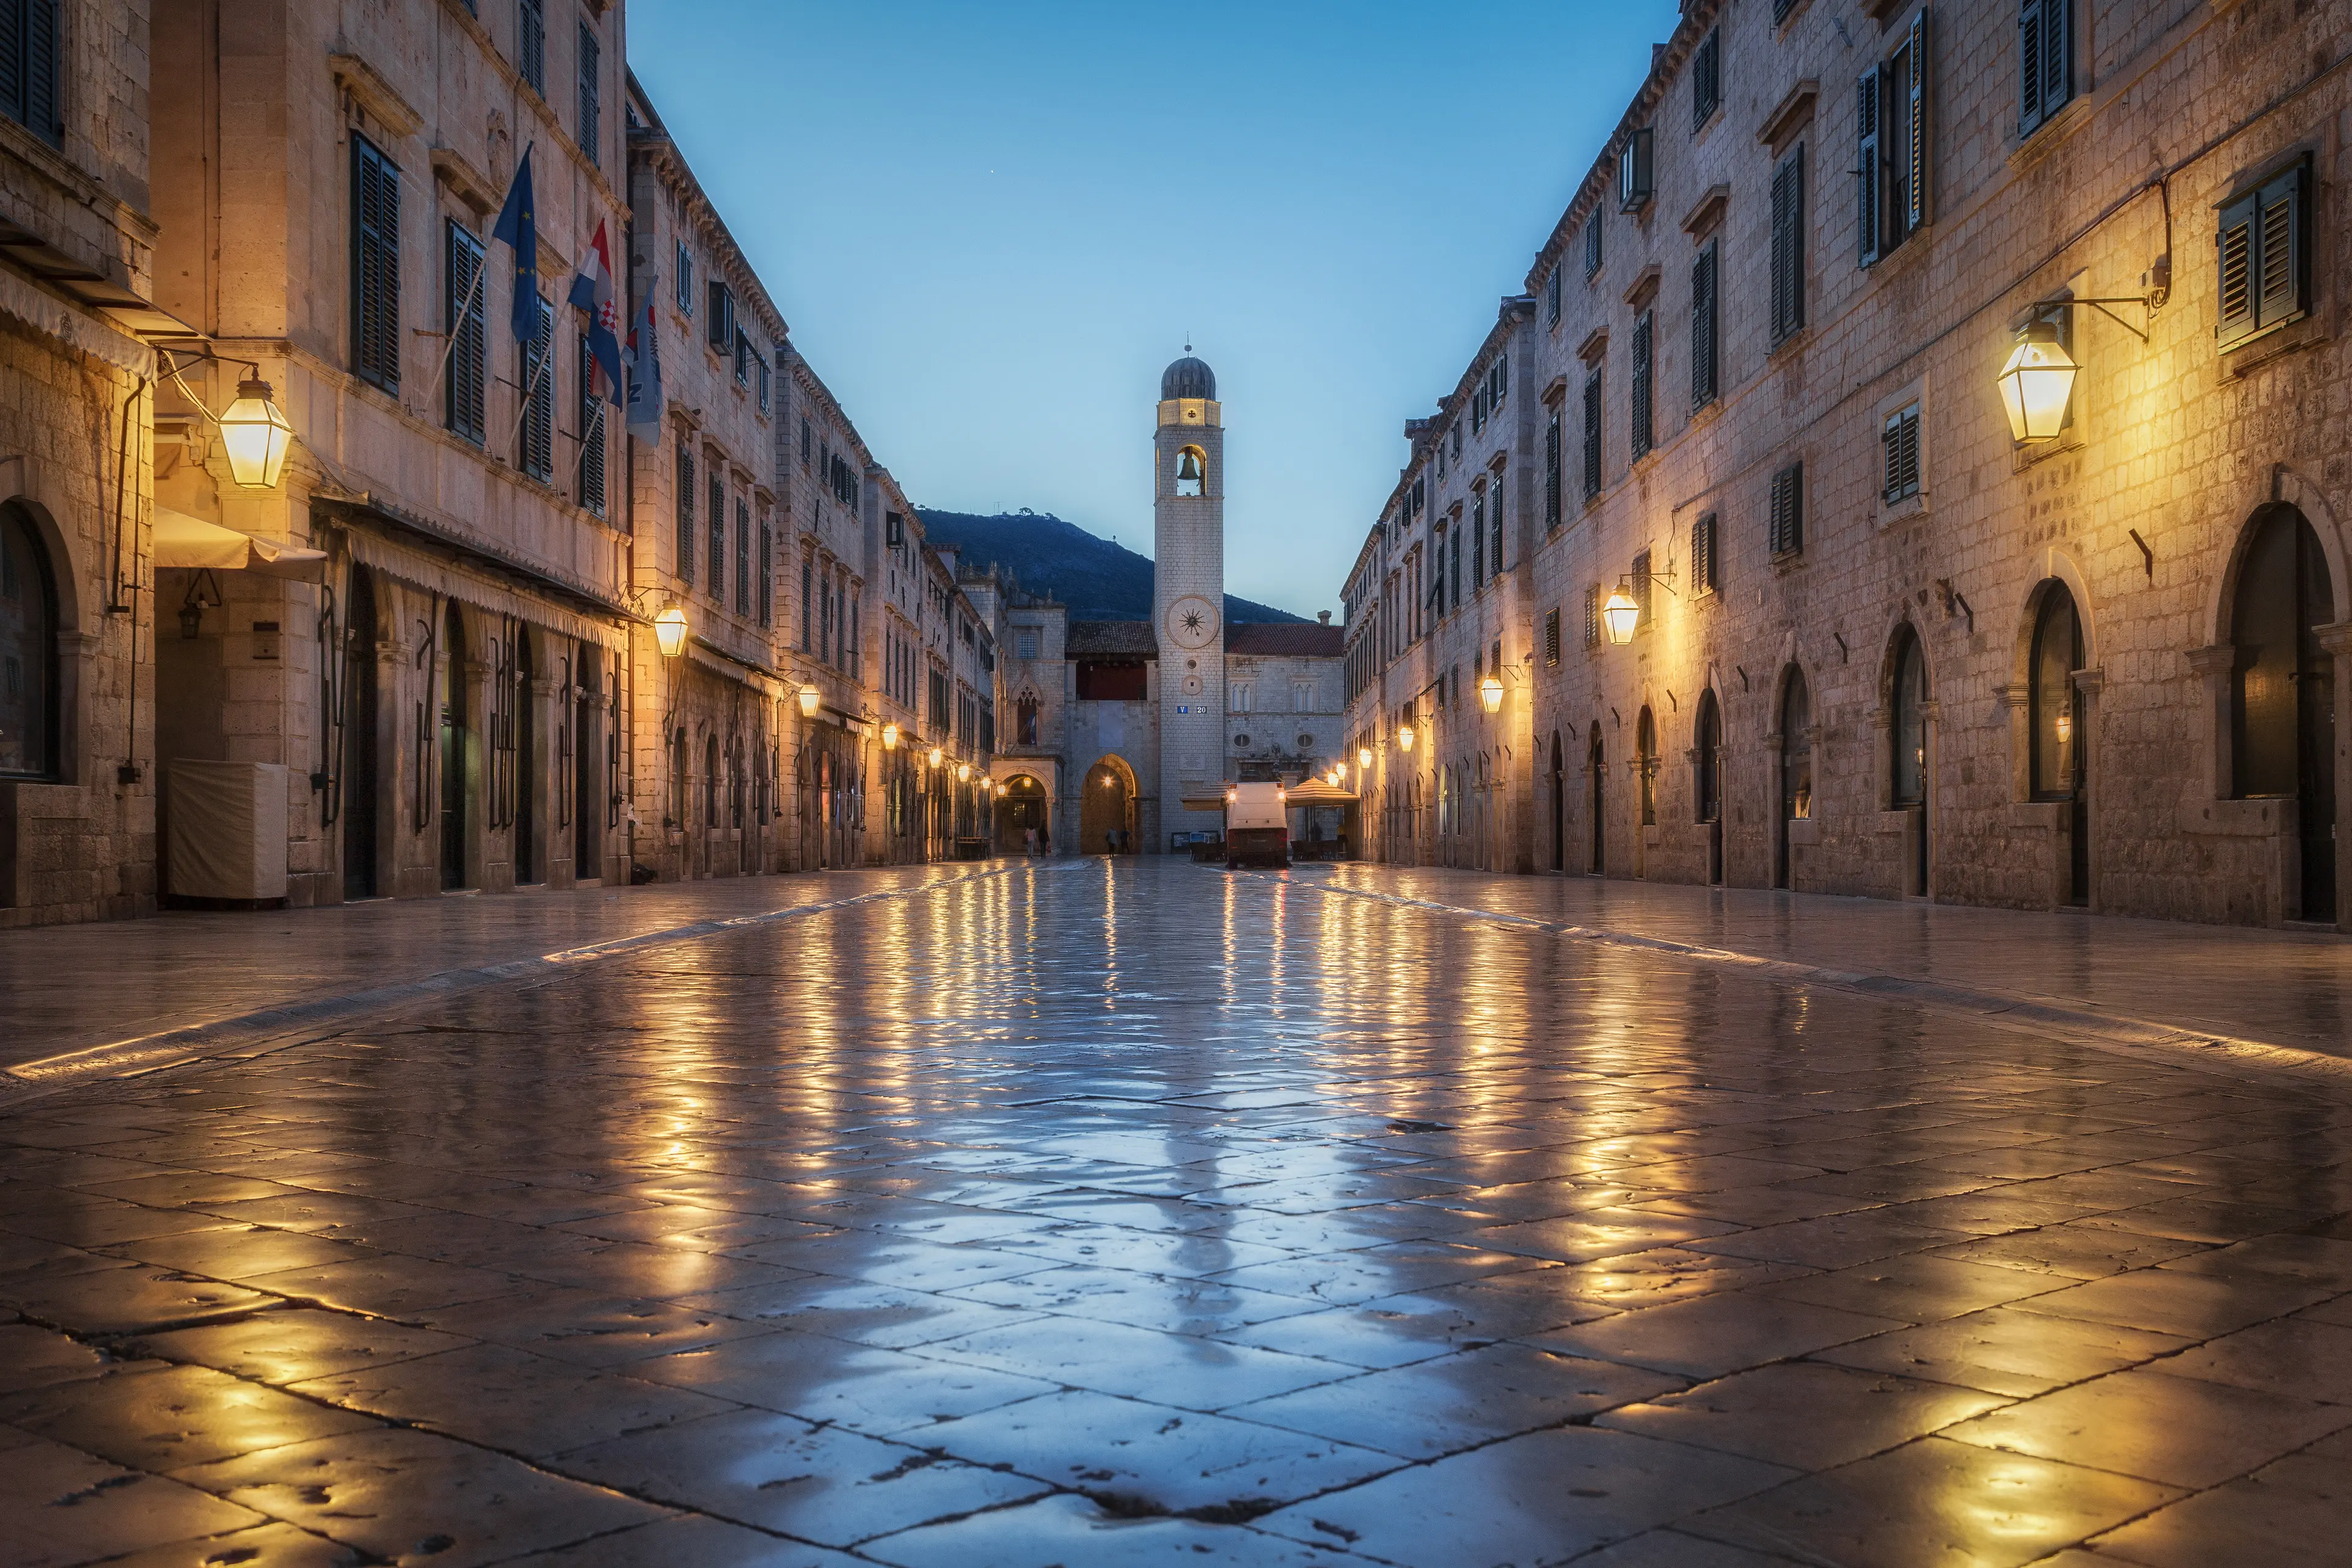 Famous Stradun, the main street of the old town of Dubrovnik, Dalmatia